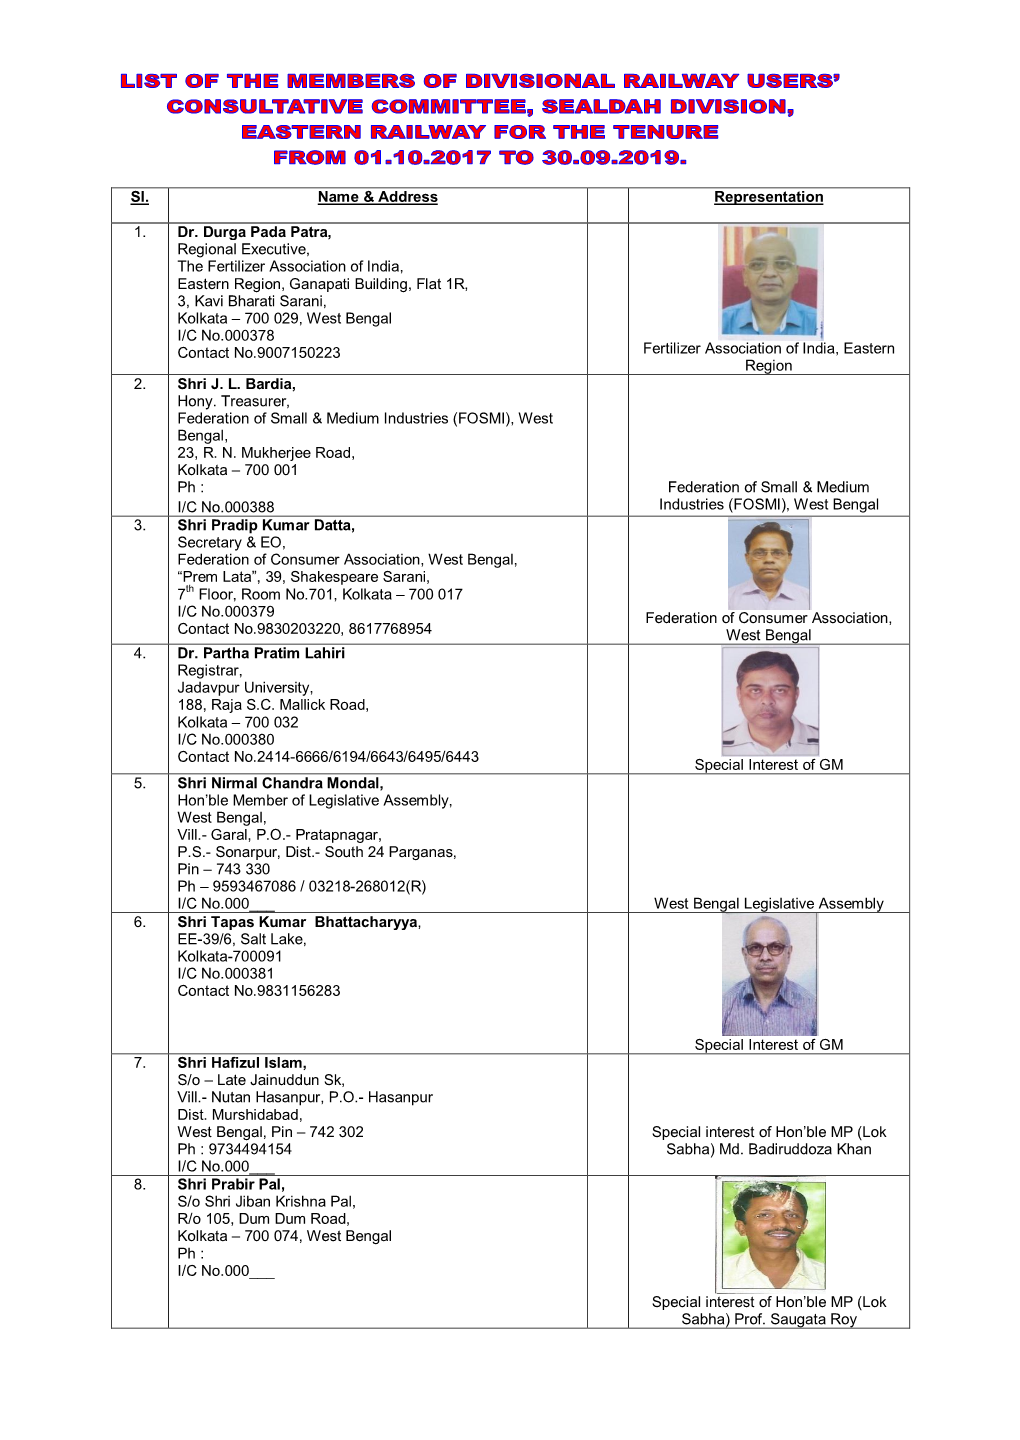 Sl. Name & Address Representation 1. Dr. Durga Pada Patra, Regional